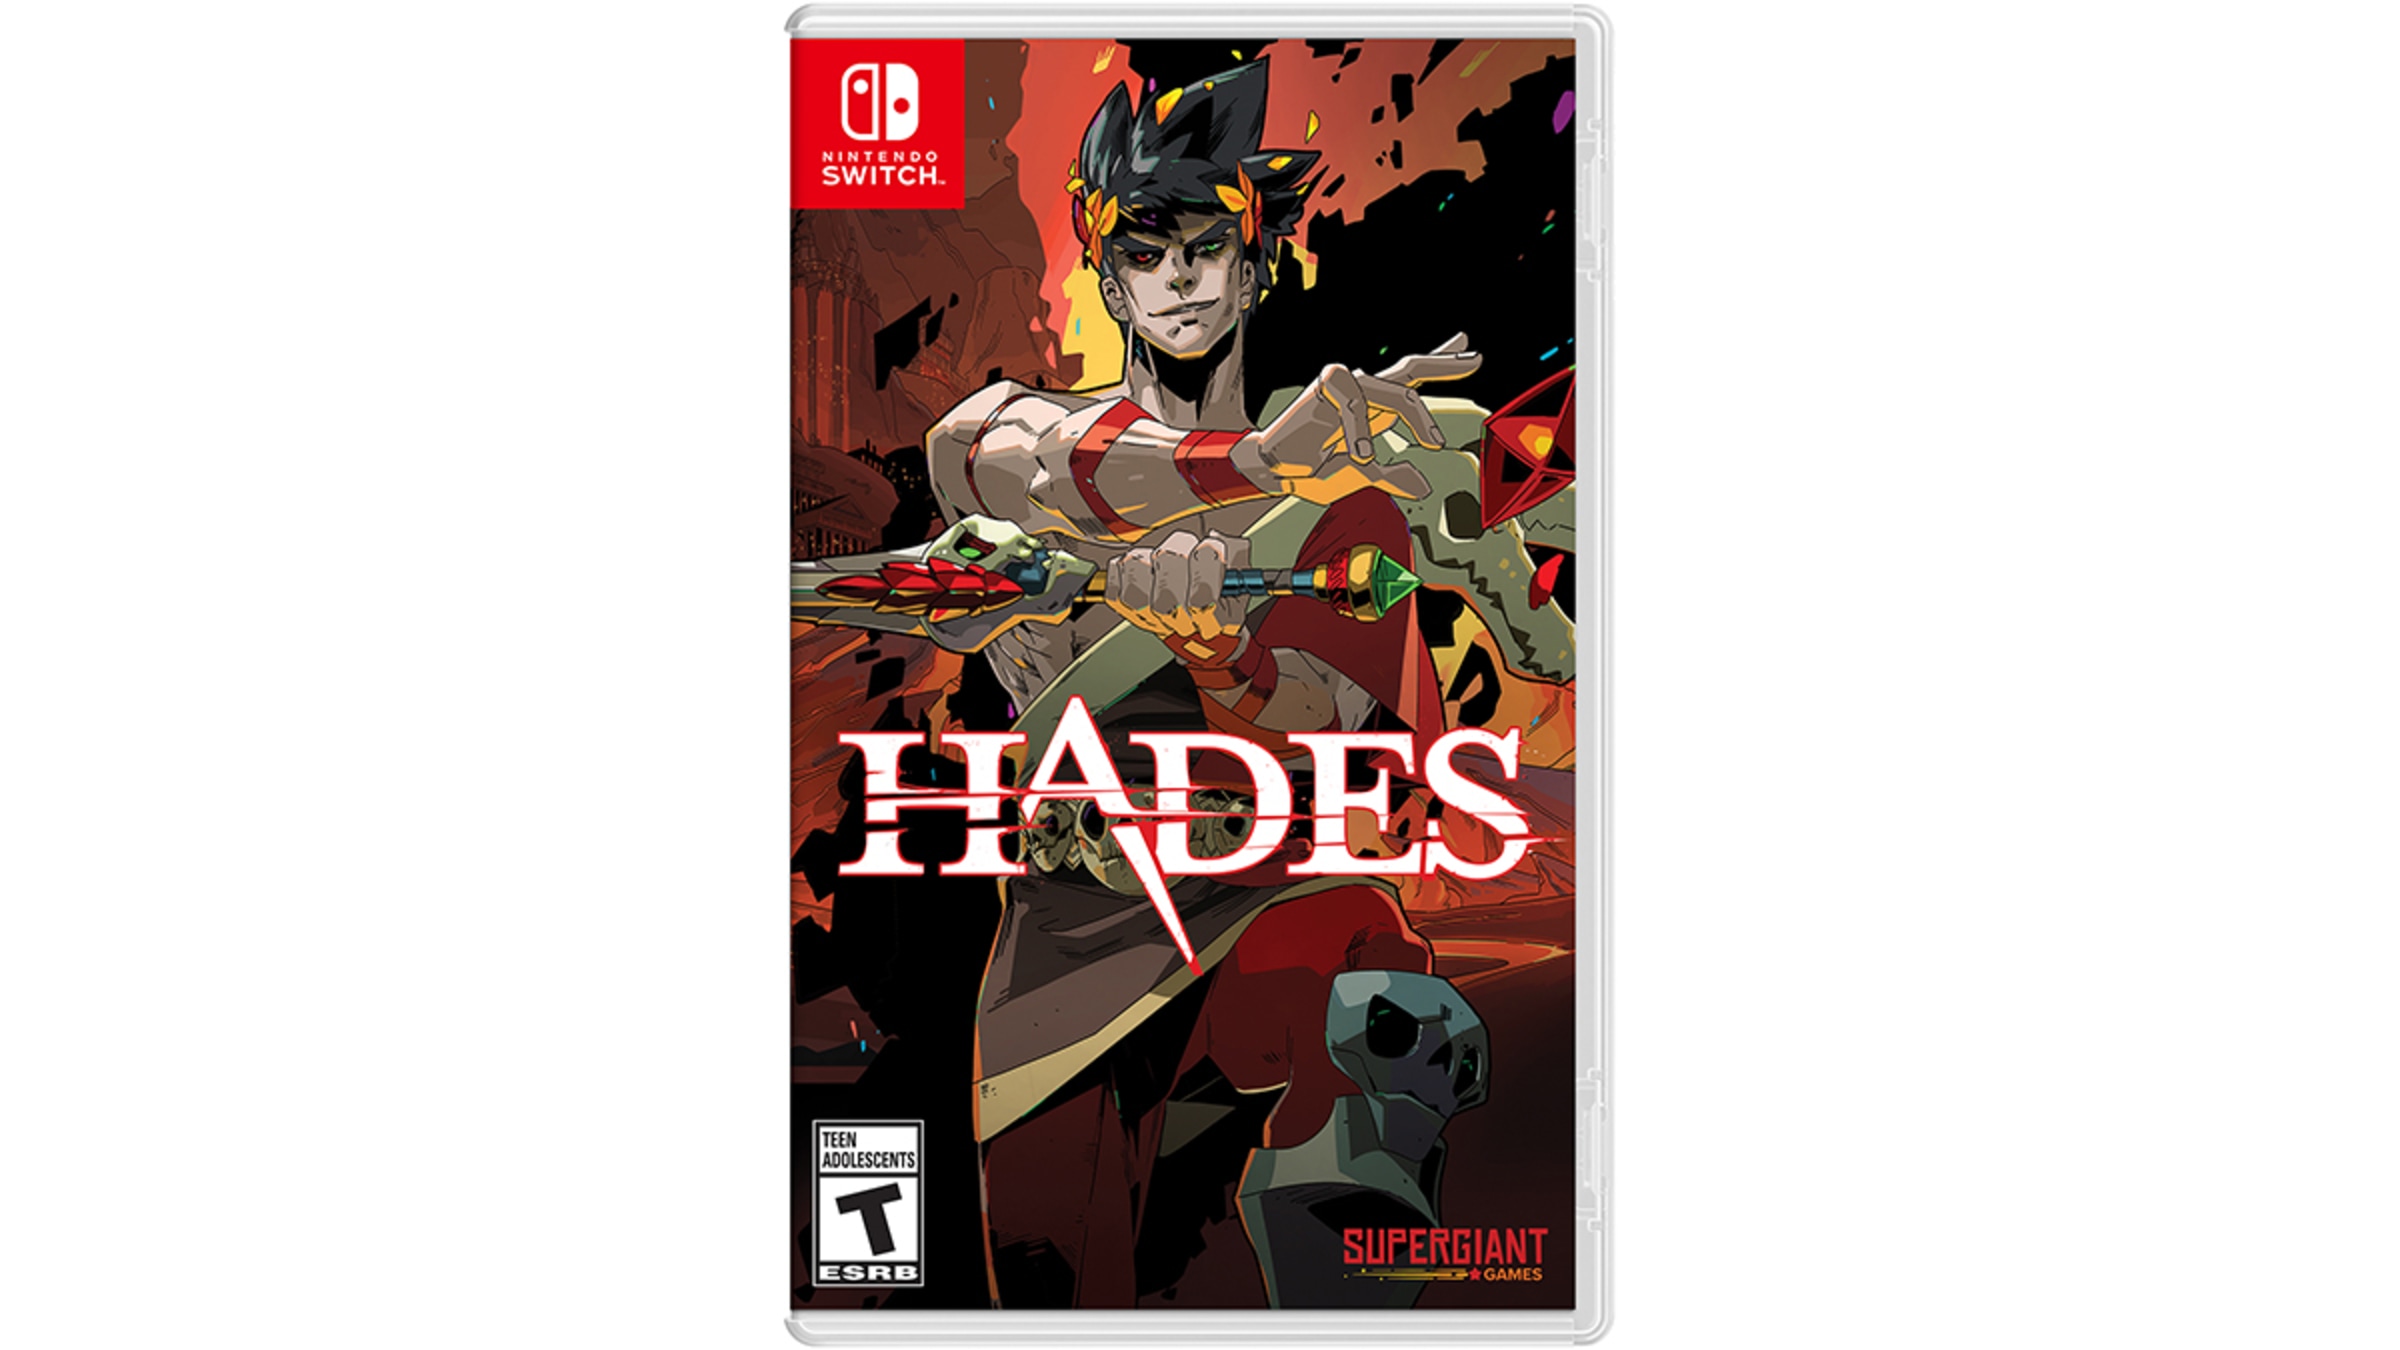 Hades  Nintendo Switch Gameplay 